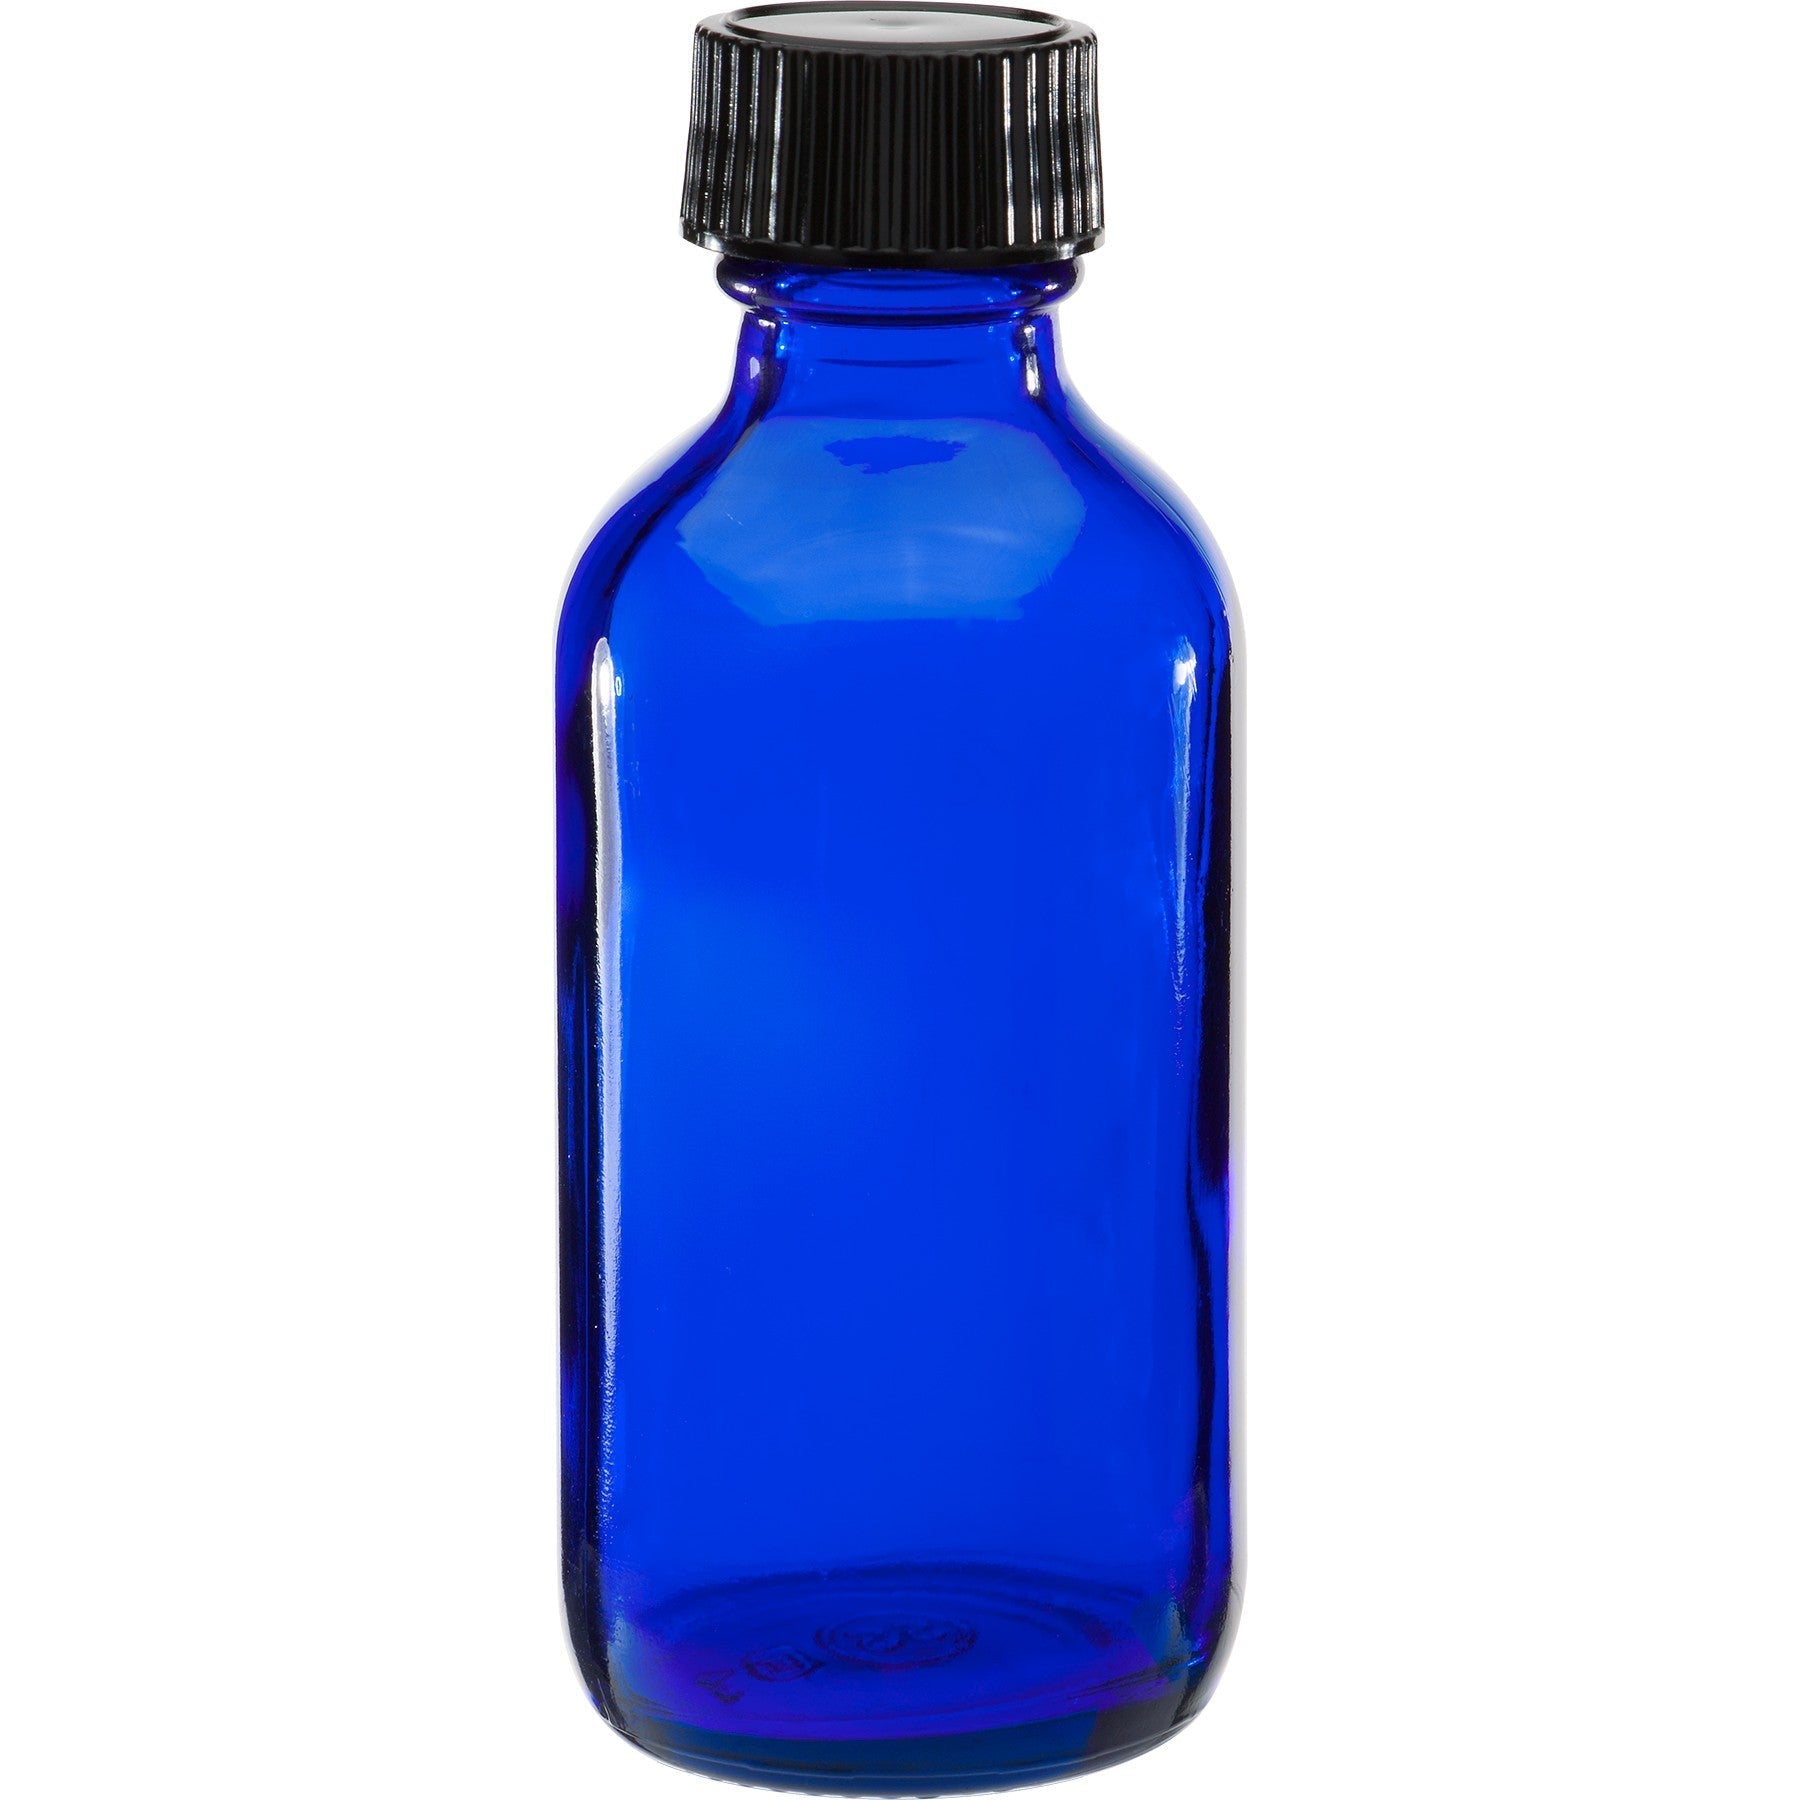 60ml Cobalt Blue Glass Bottle With Cap Fusion Flavours